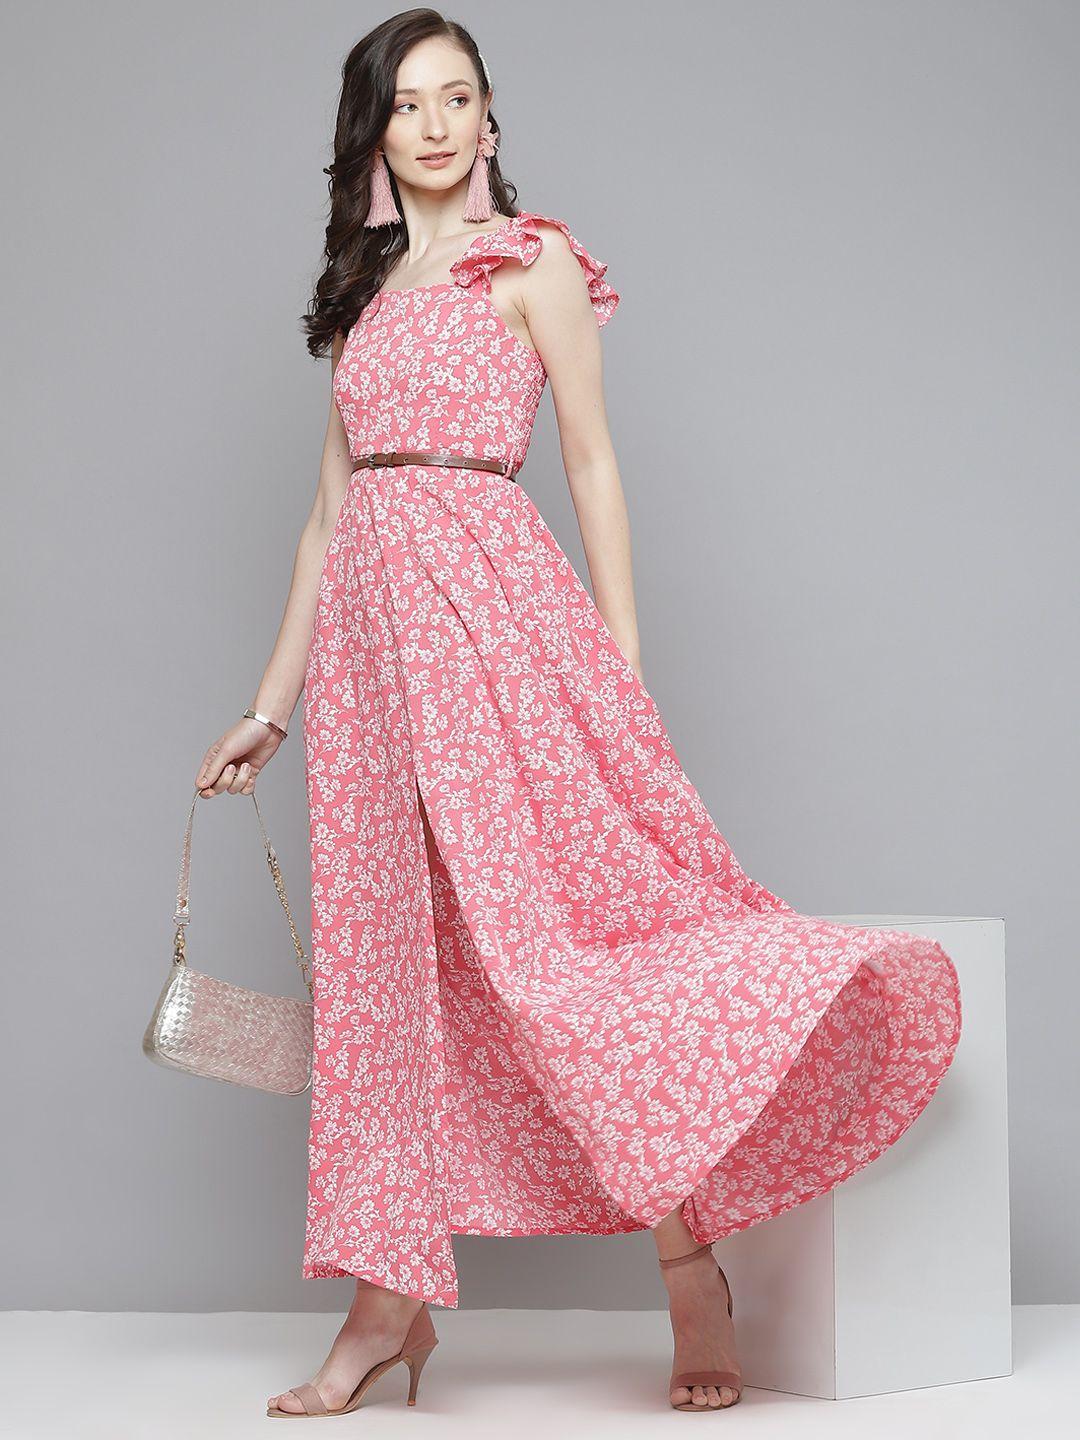 sassafras pink & white floral maxi dress with belt